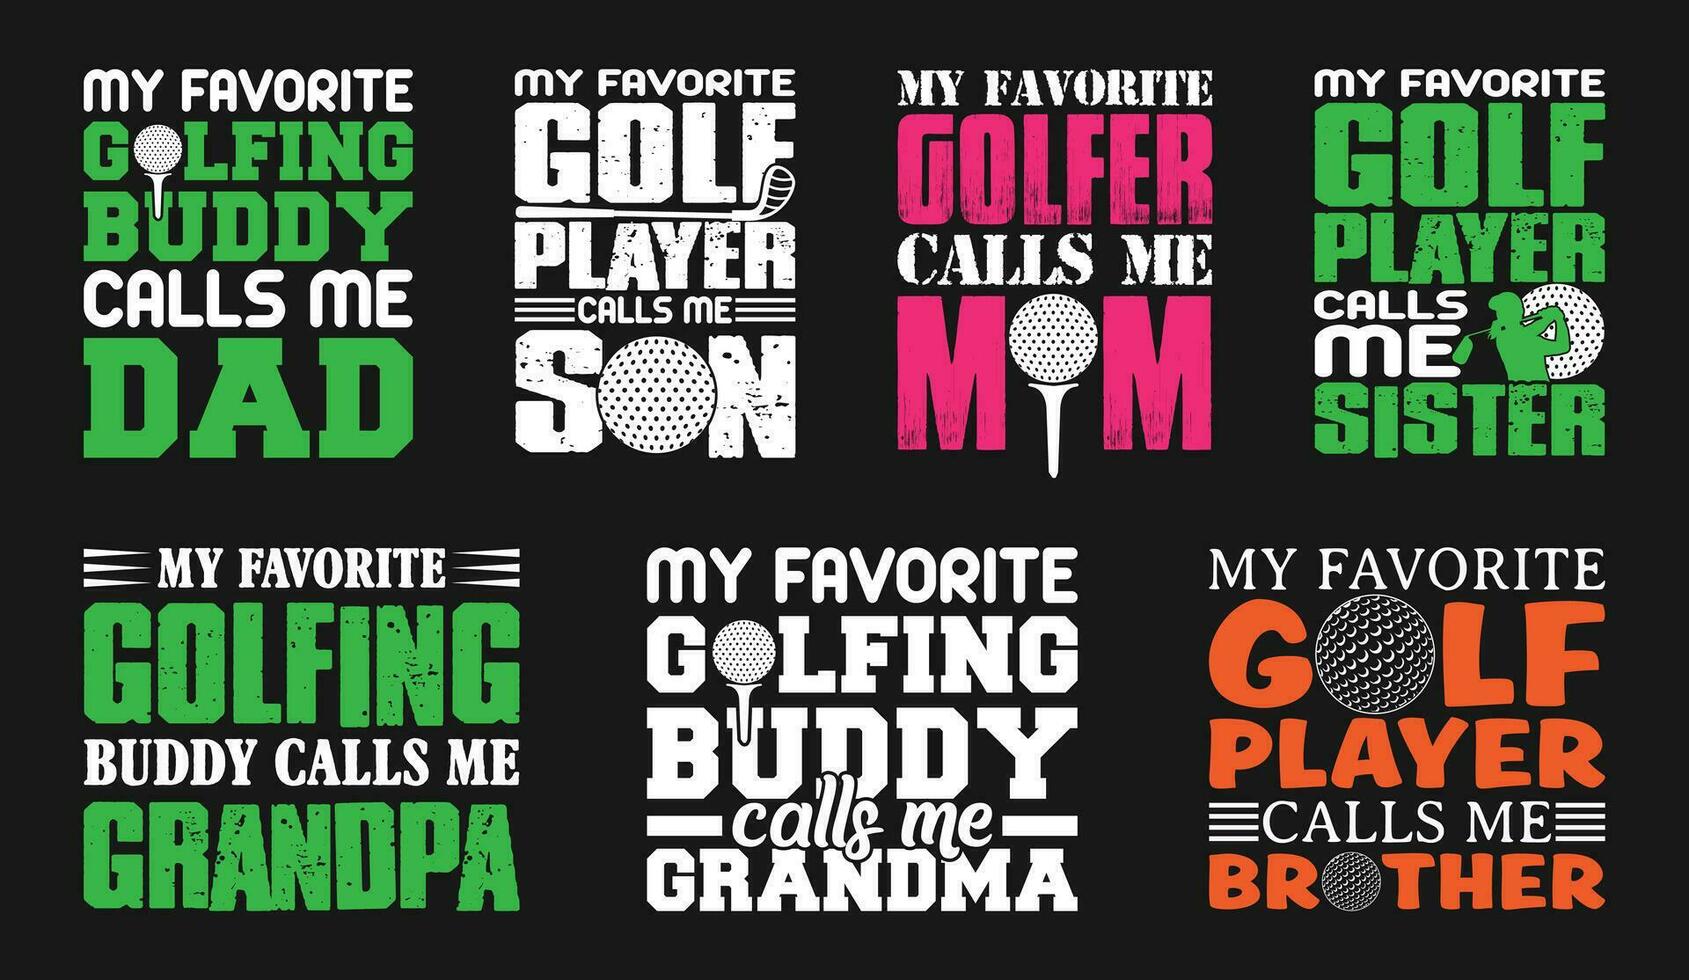 golfe família t camisa Projeto pacote, vetor golfe t camisa projeto, golfe camisa, golfe tipografia t camisa Projeto coleção